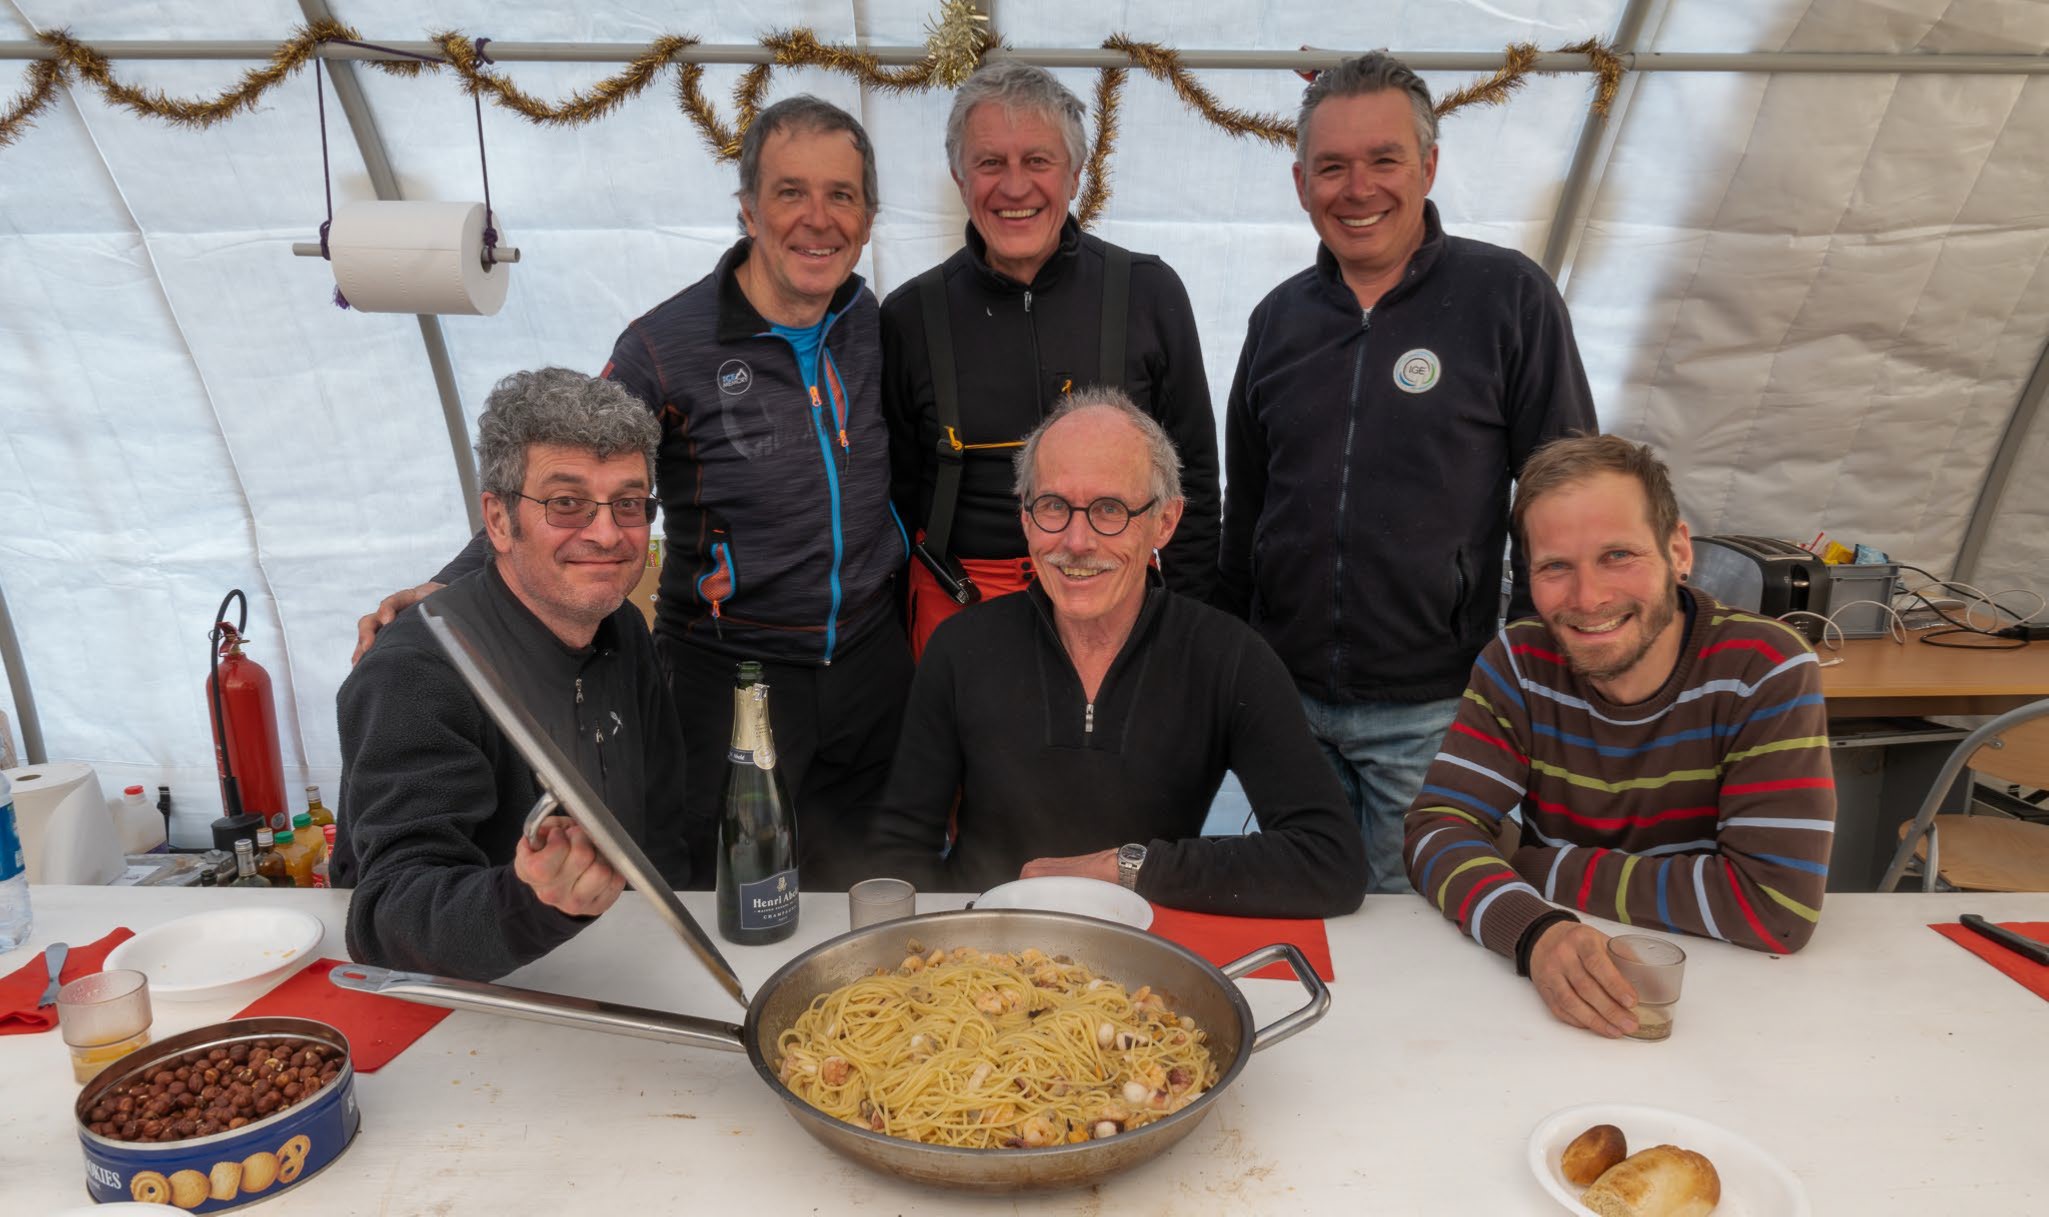 The remaining LDC personnel enjoying Saverio’s cuisine: Spaghetti marinara